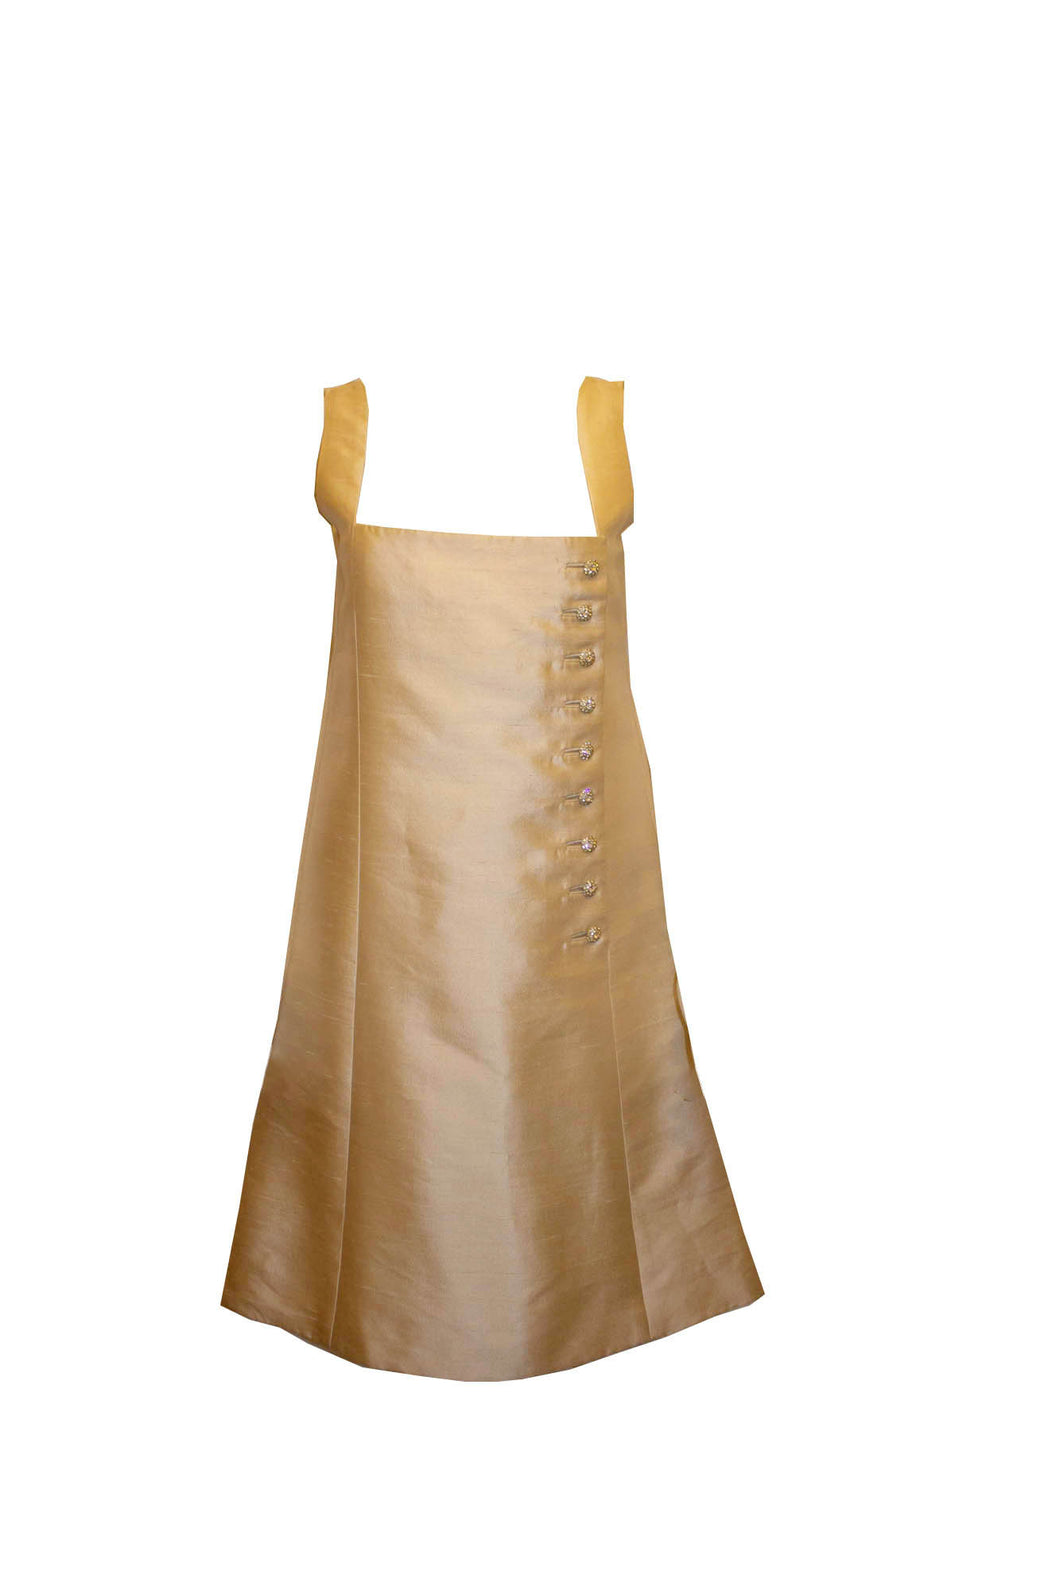 Vintage Malcolm Starr Ivory Silk Dress